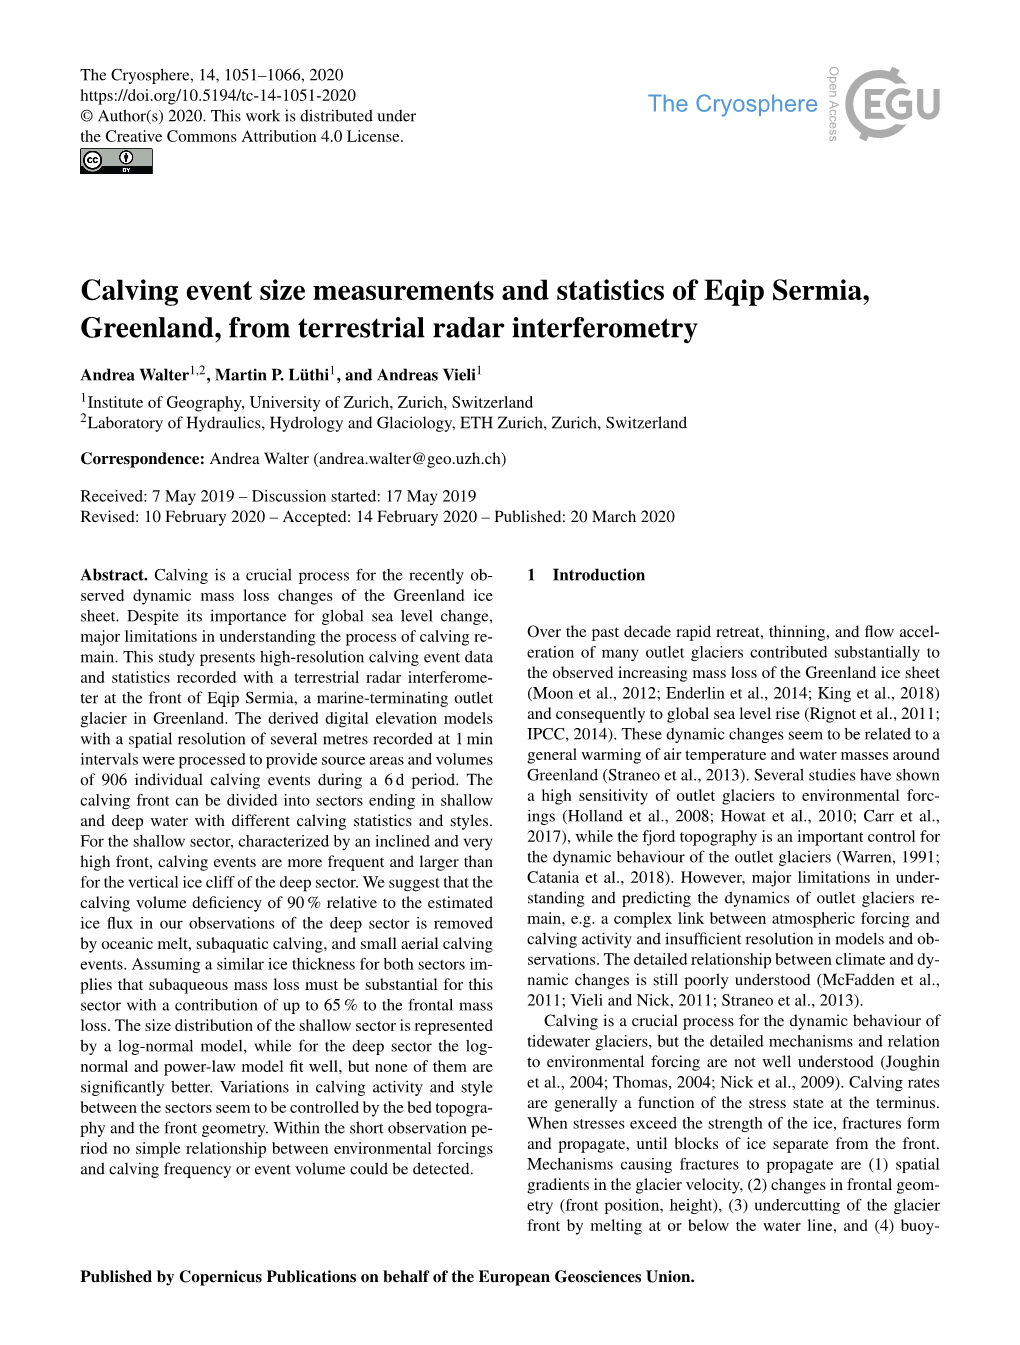 Calving Event Size Measurements and Statistics of Eqip Sermia, Greenland, from Terrestrial Radar Interferometry